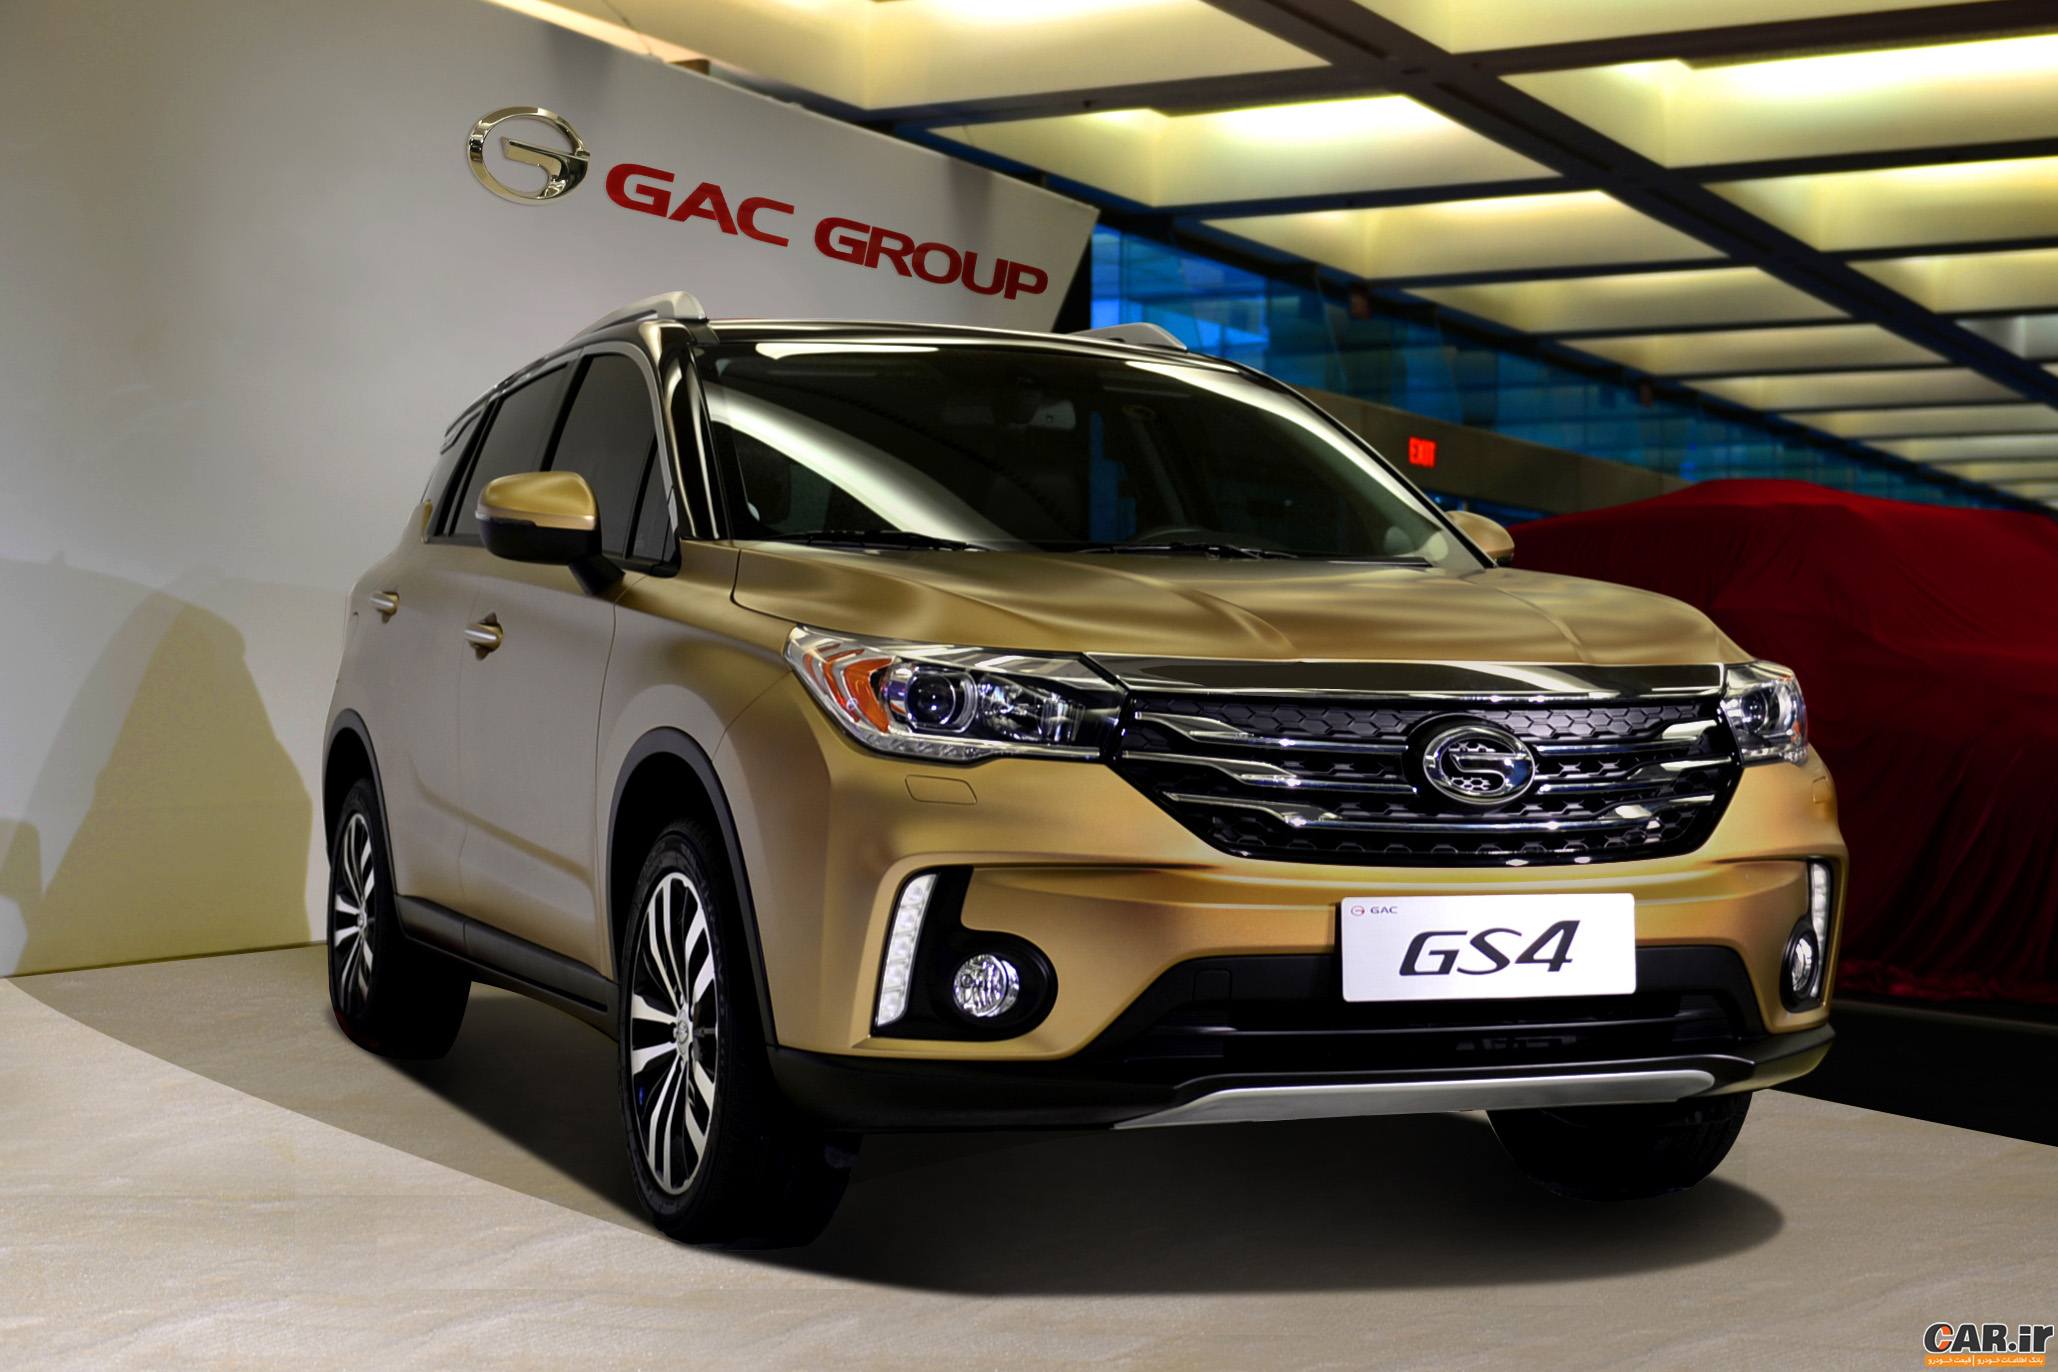  GAC خودروسازی از چین 